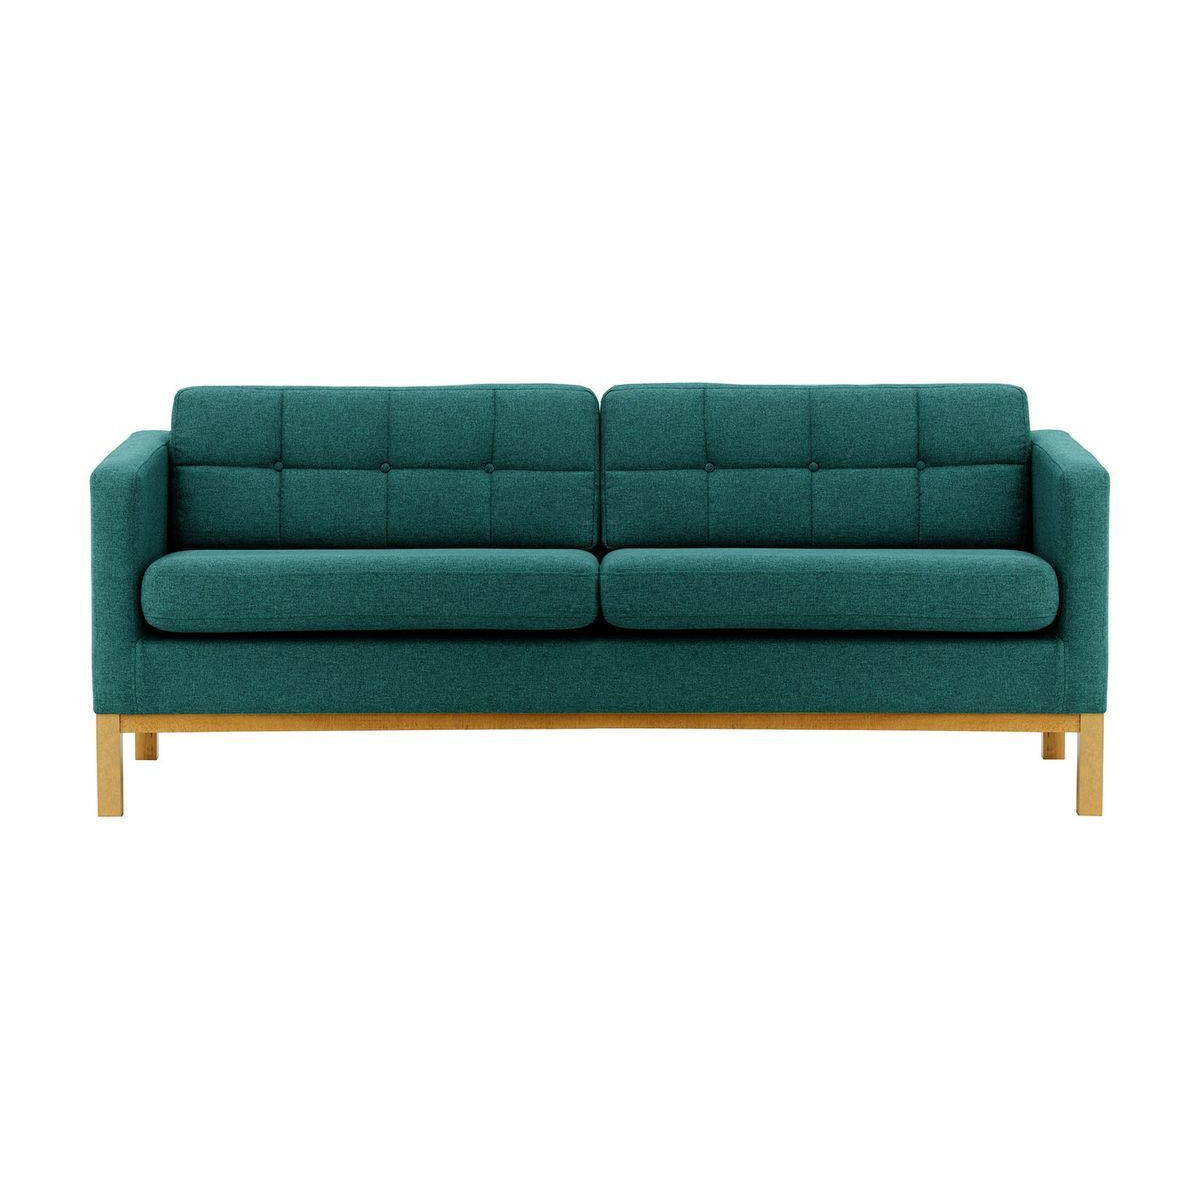 Normann 3 Seater Sofa, blue, Leg colour: like oak - image 1